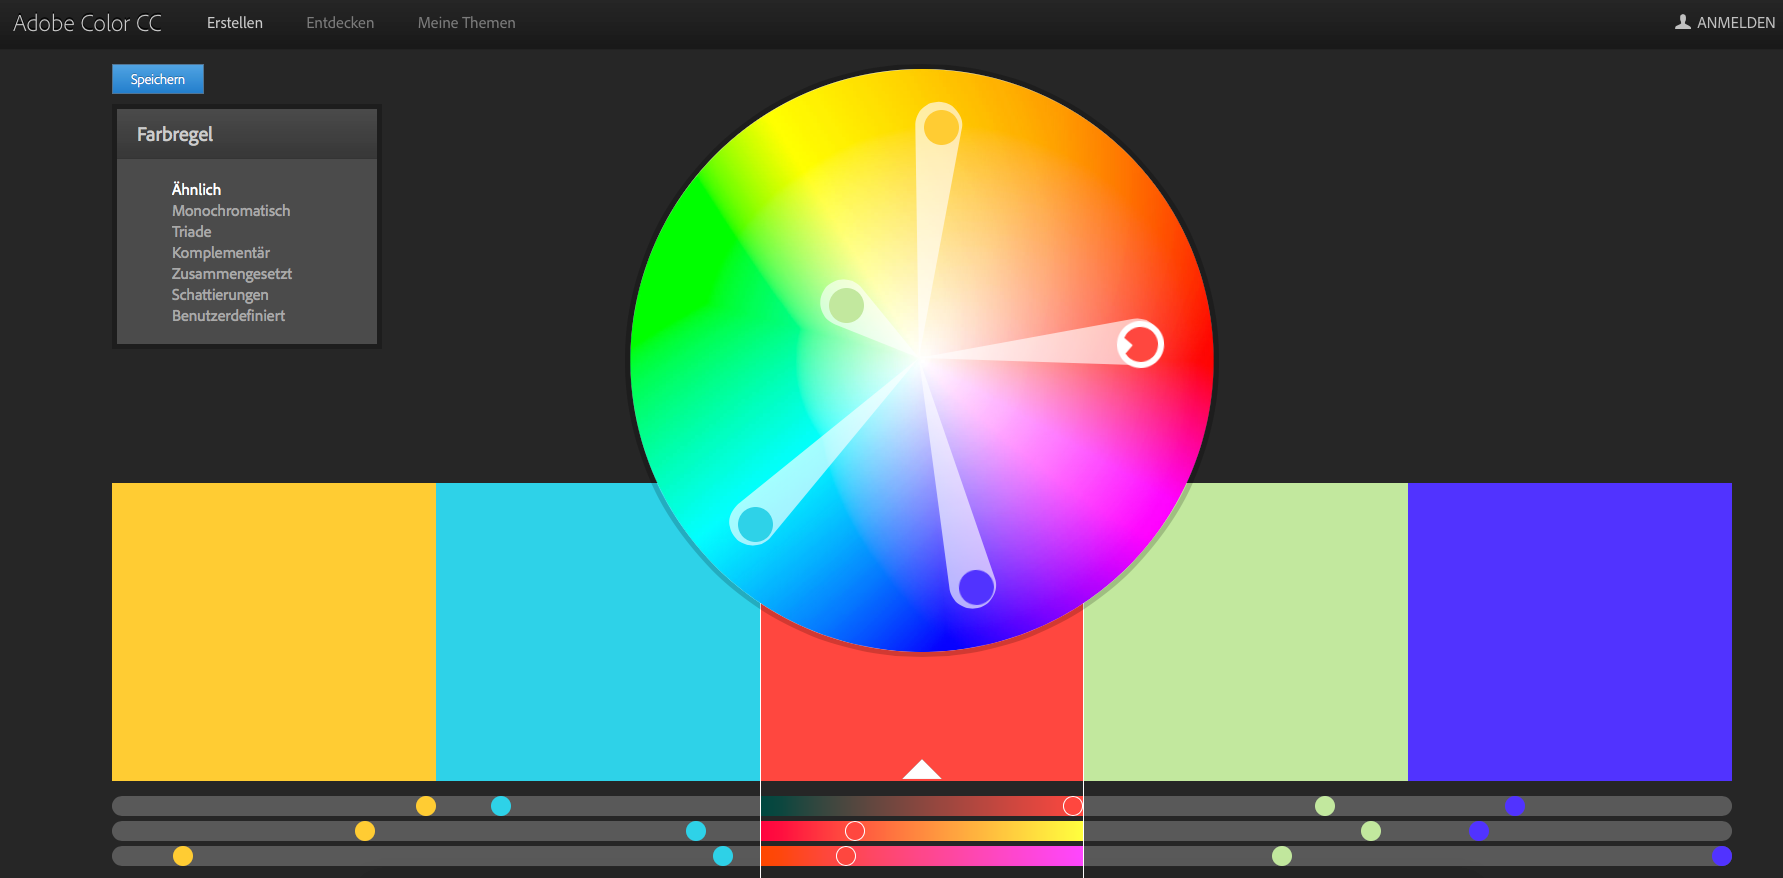 Farbrad Farbschemata - Adobe ColorCC